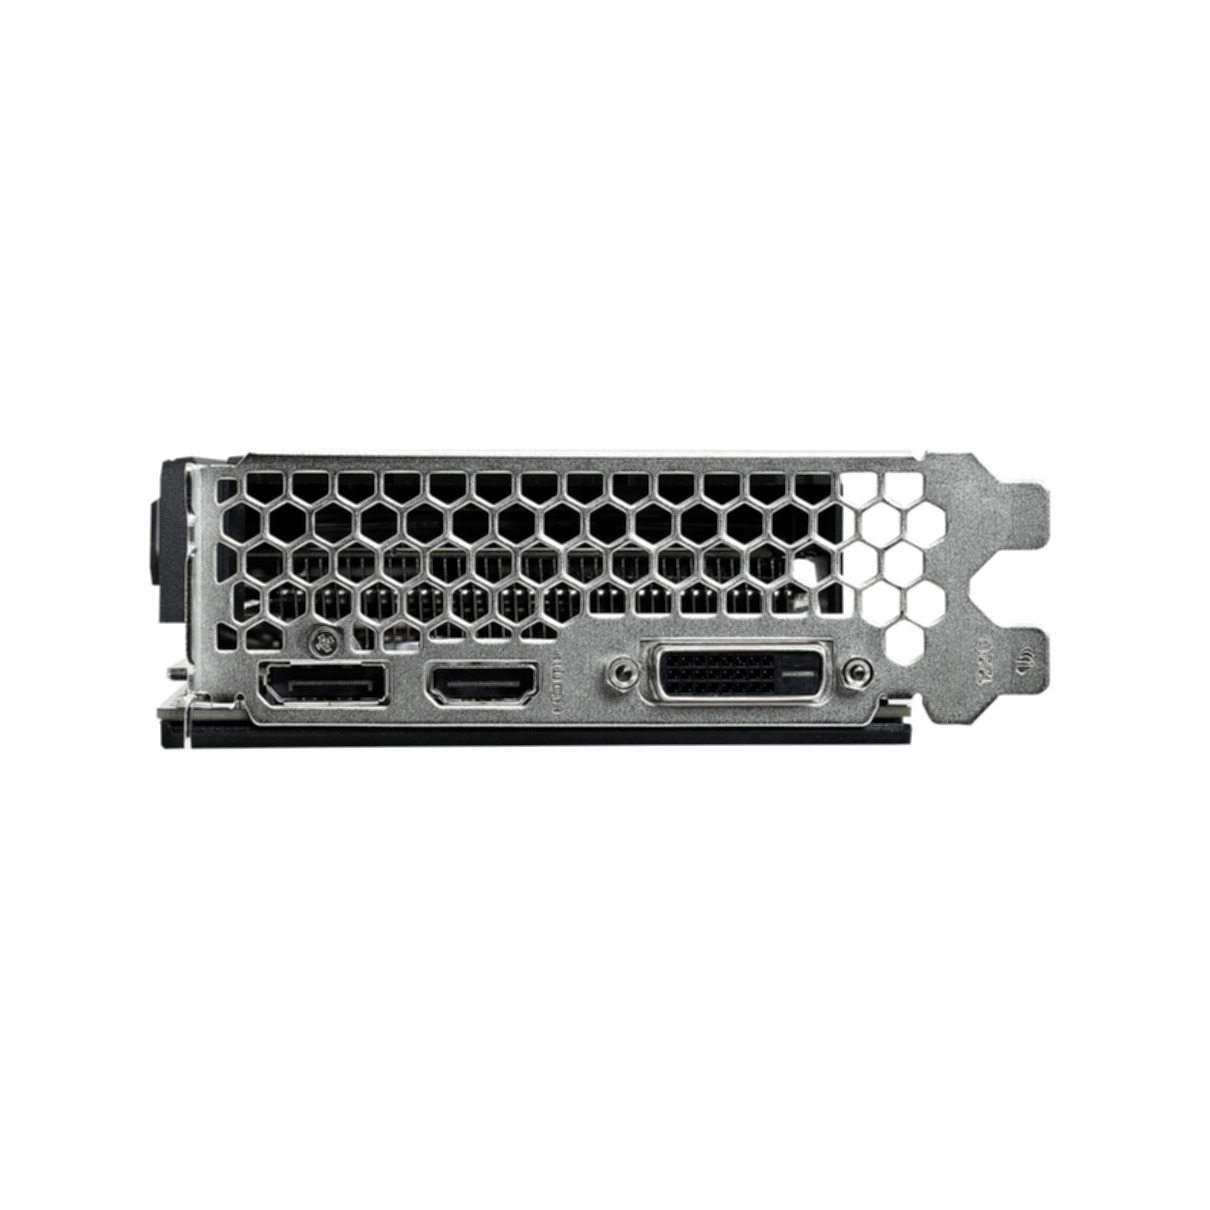 PNY GeForce RTX 2060 Dual Grafikkarte) (NVIDIA, 12GB REVEL Fan